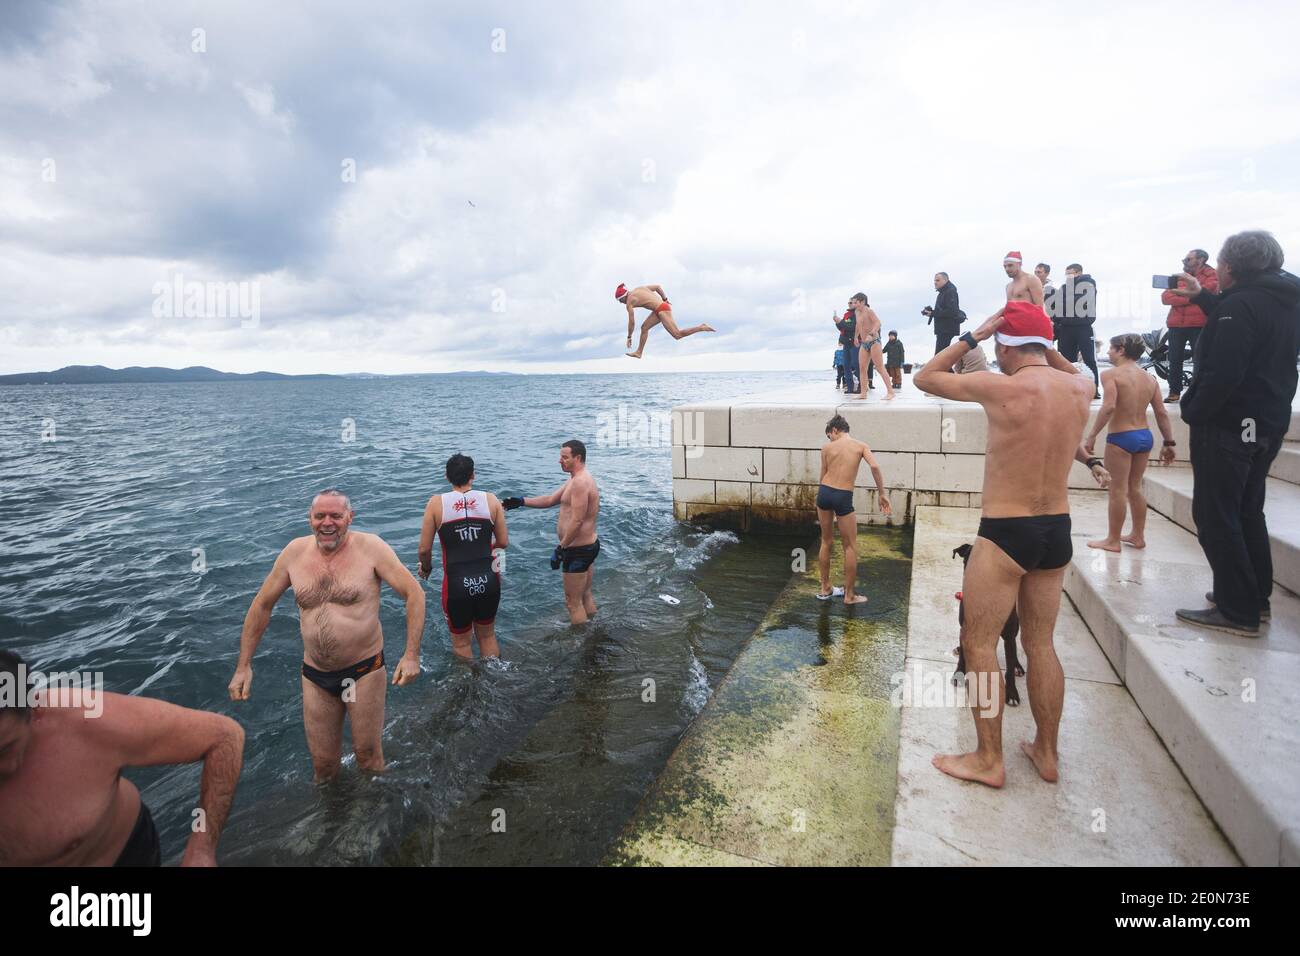 (210102) -- ZADAR, Jan. 2, 2021 (Xinhua) -- A man jumps into the sea to celebrate the New Year in Zadar, Croatia, Jan. 1, 2021. (Marko Dimic/Pixsell via Xinhua) Stock Photo